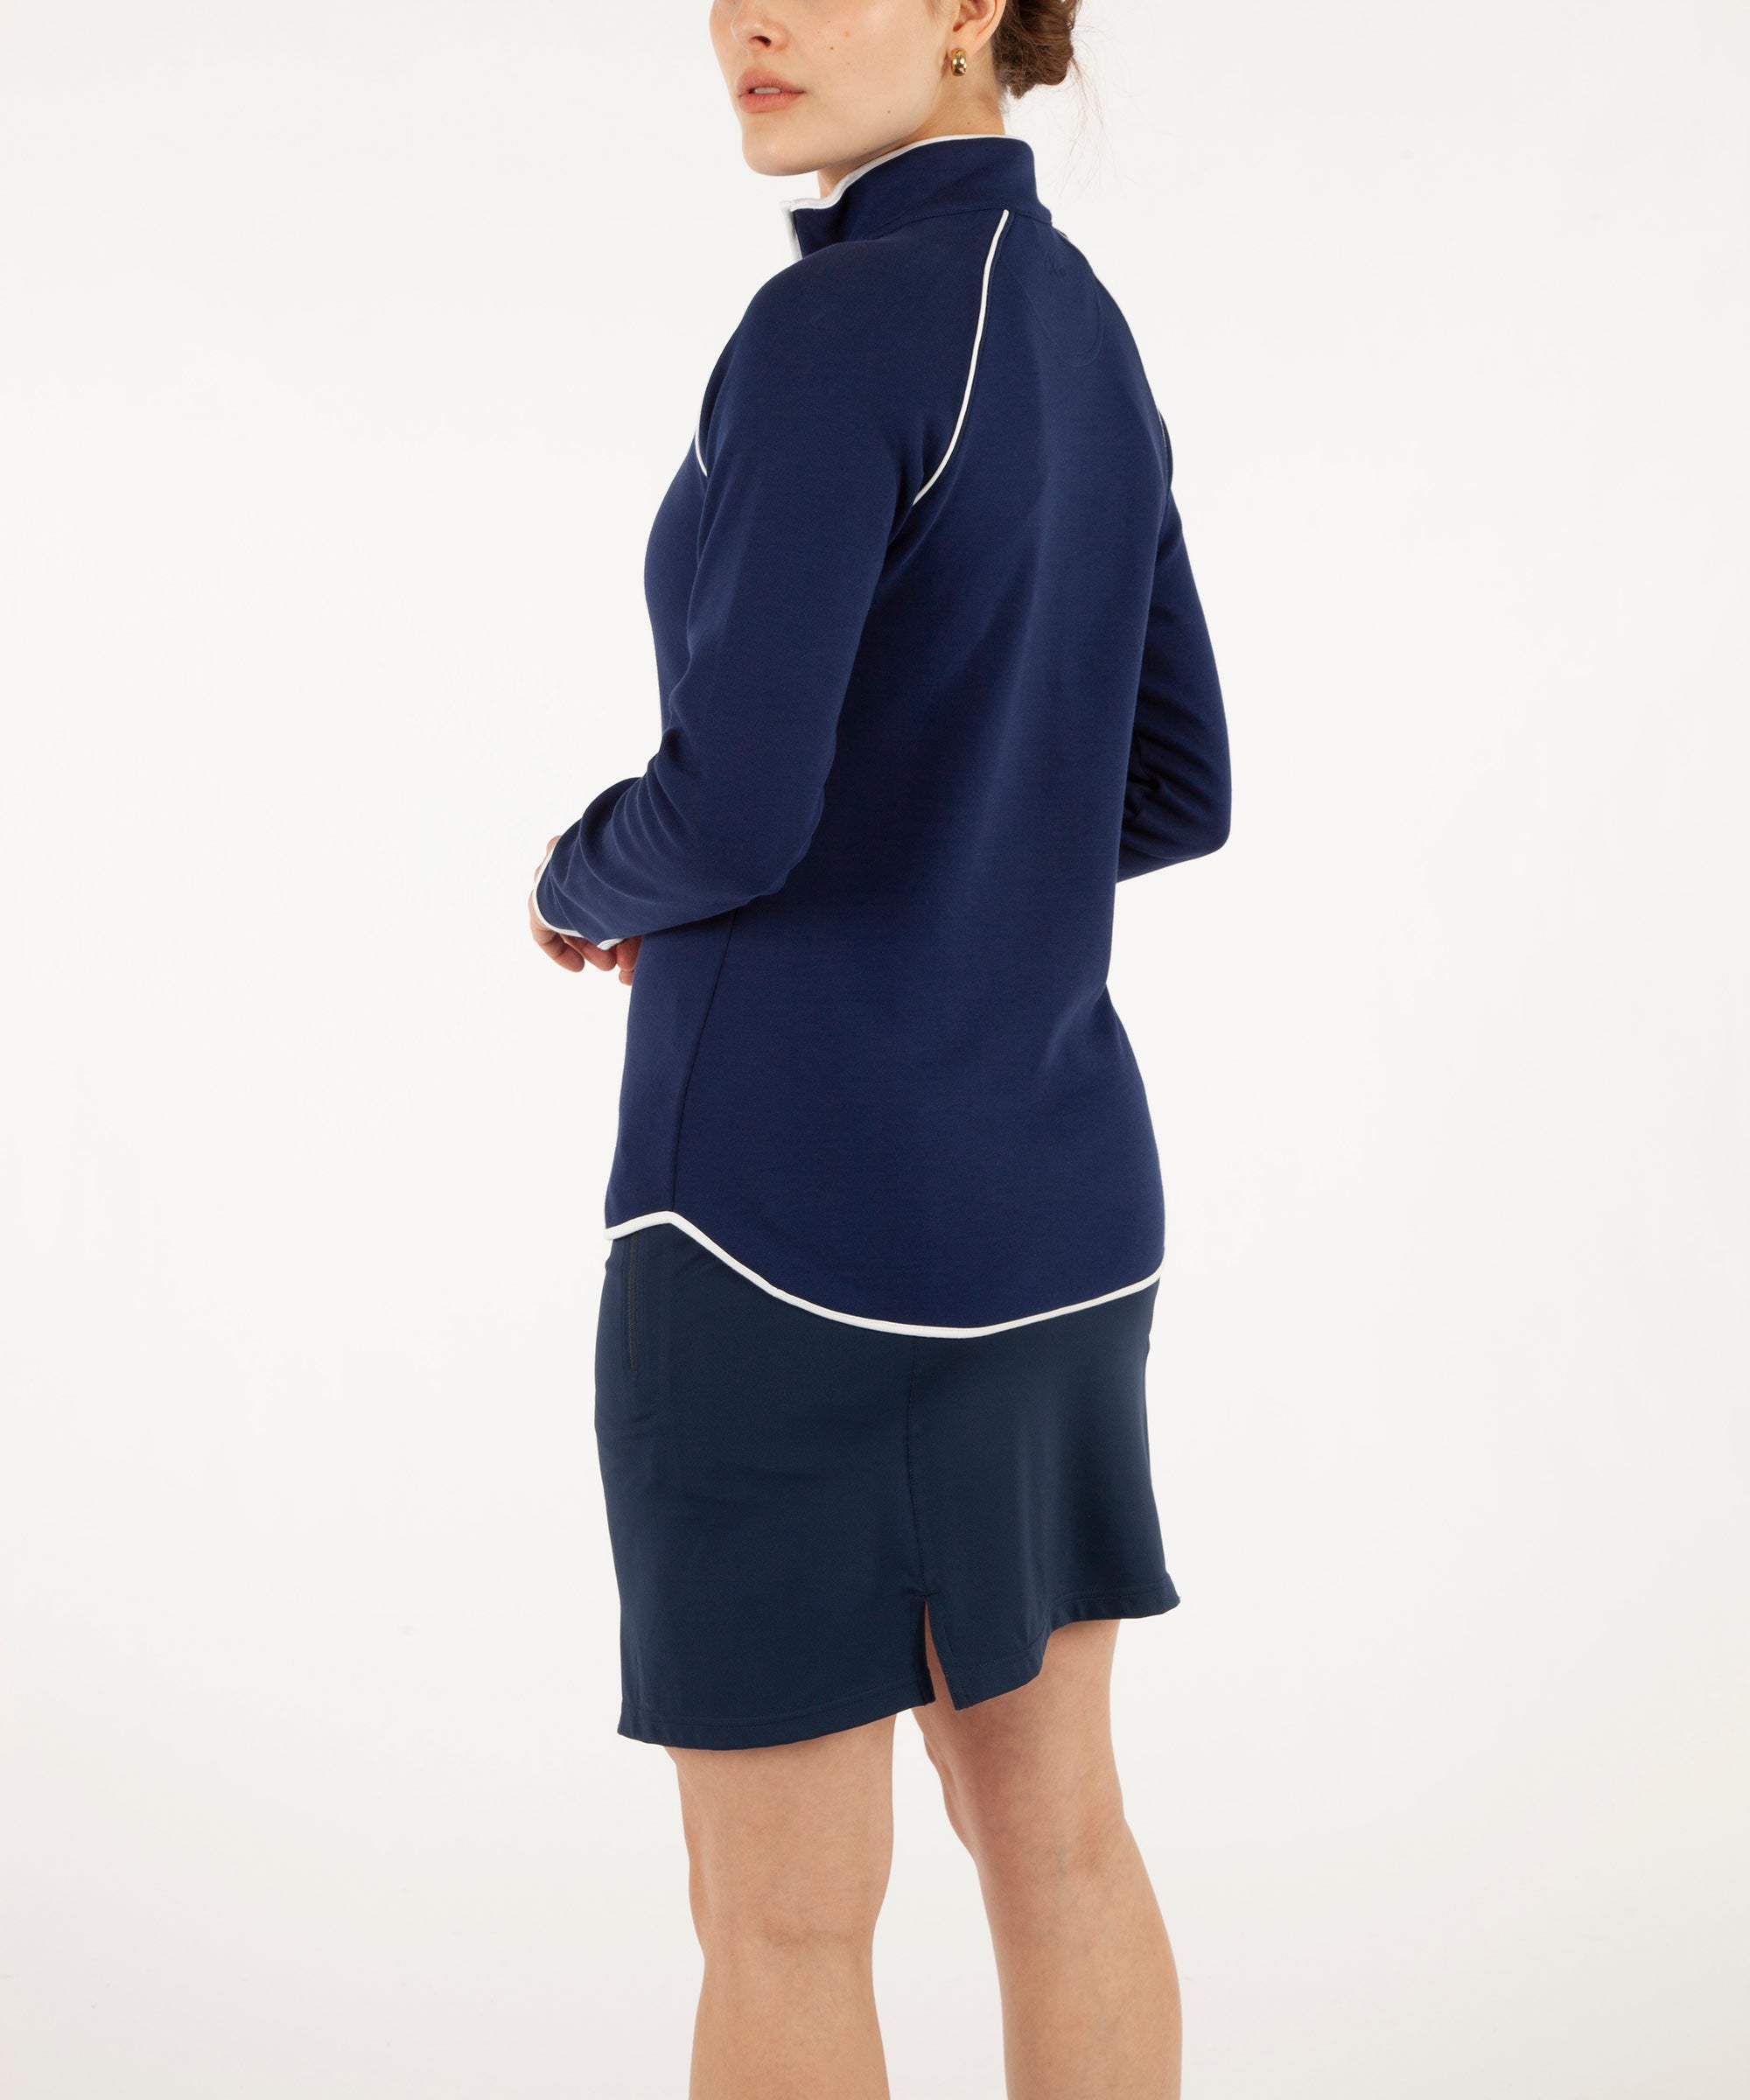 Women's Pima Cotton Solid Quarter-Zip Pullover